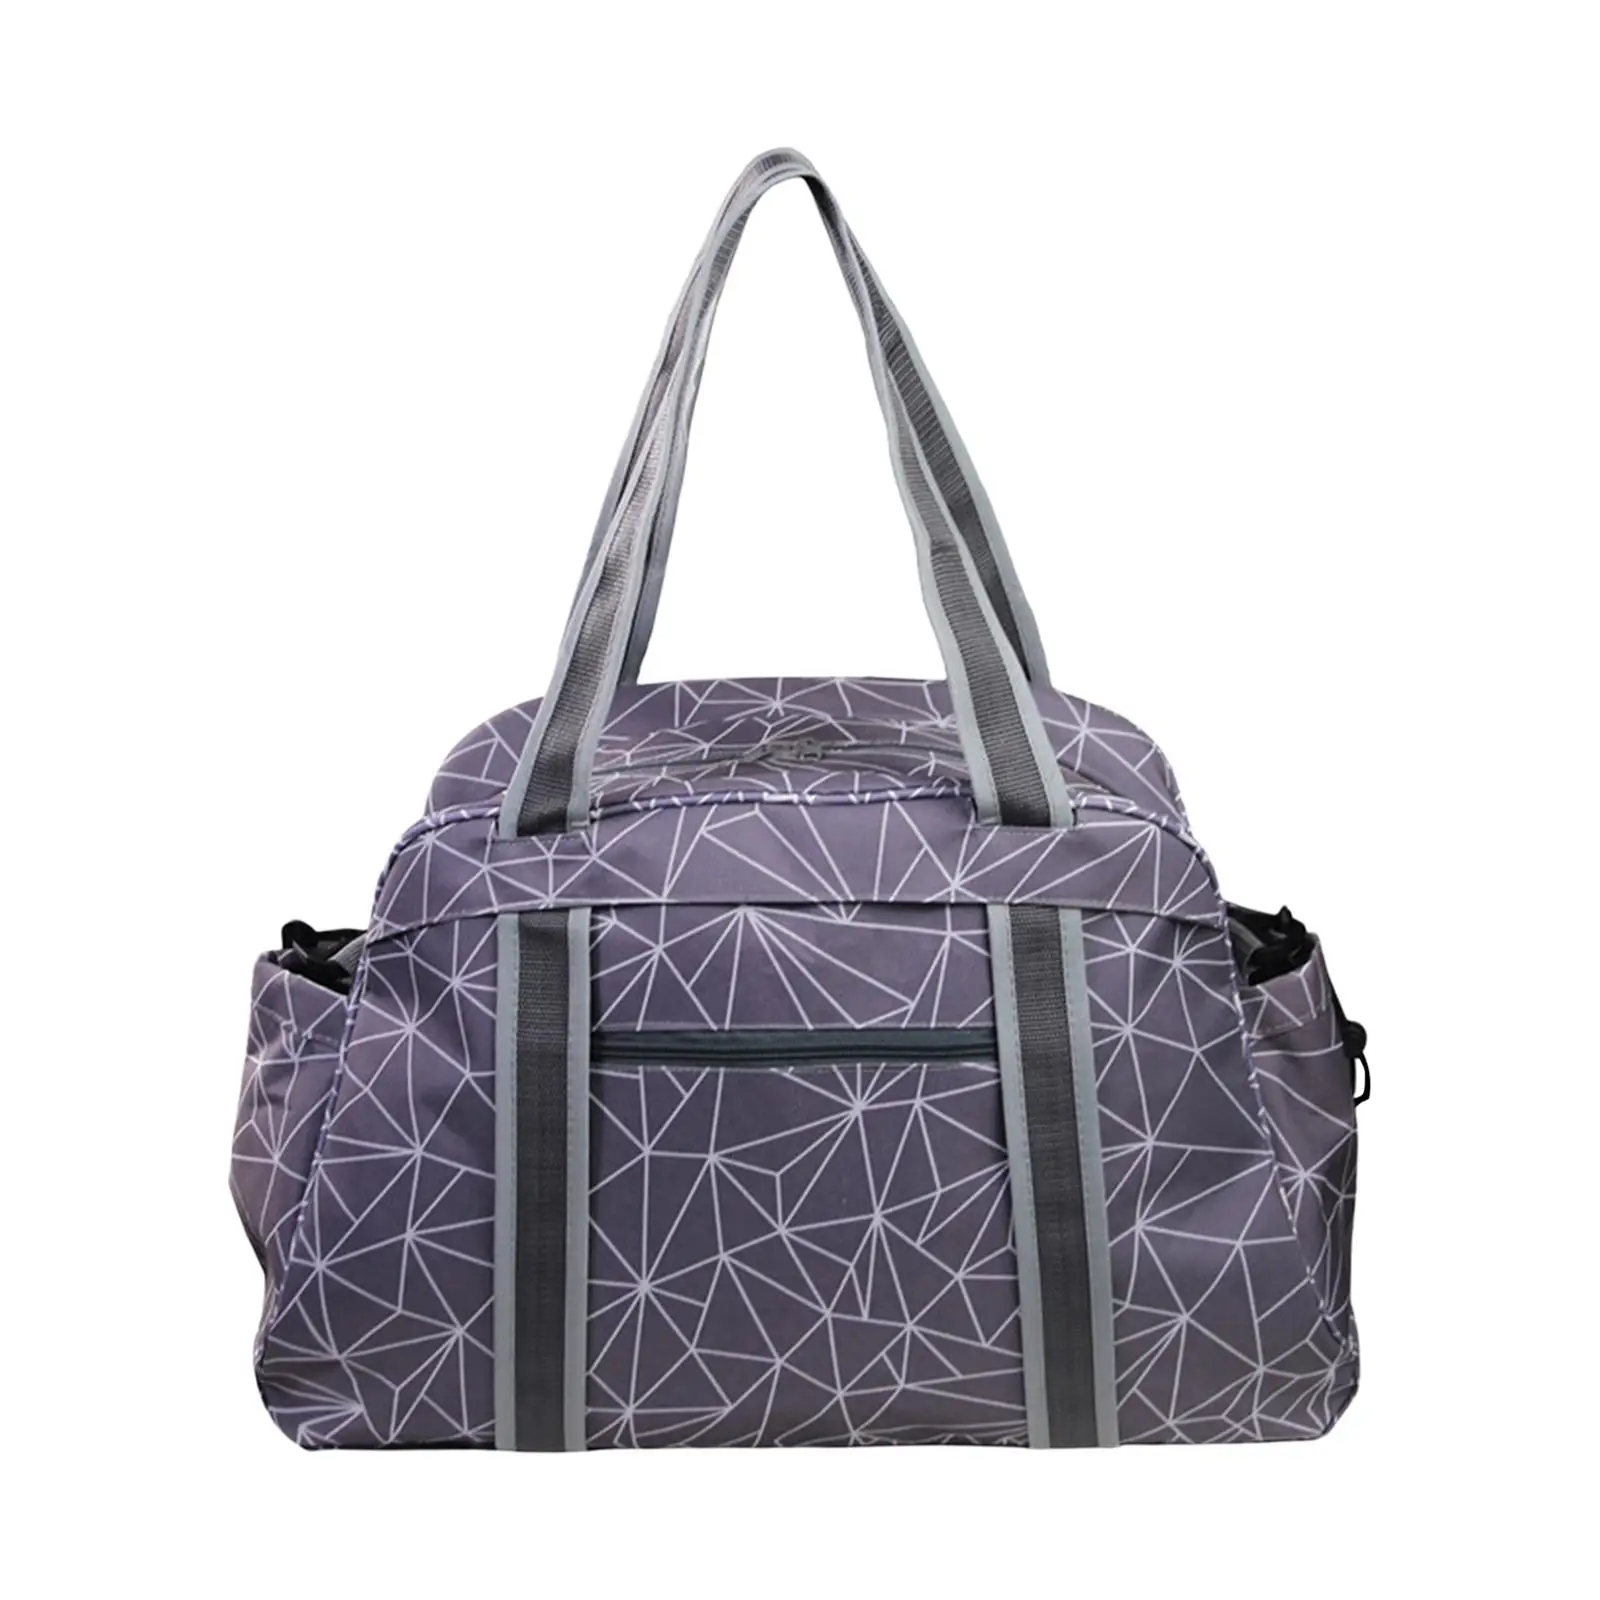 Large Capacity Travel Duffle Bag Handbag Sports Gym Bag for Yoga Swimming Clothing